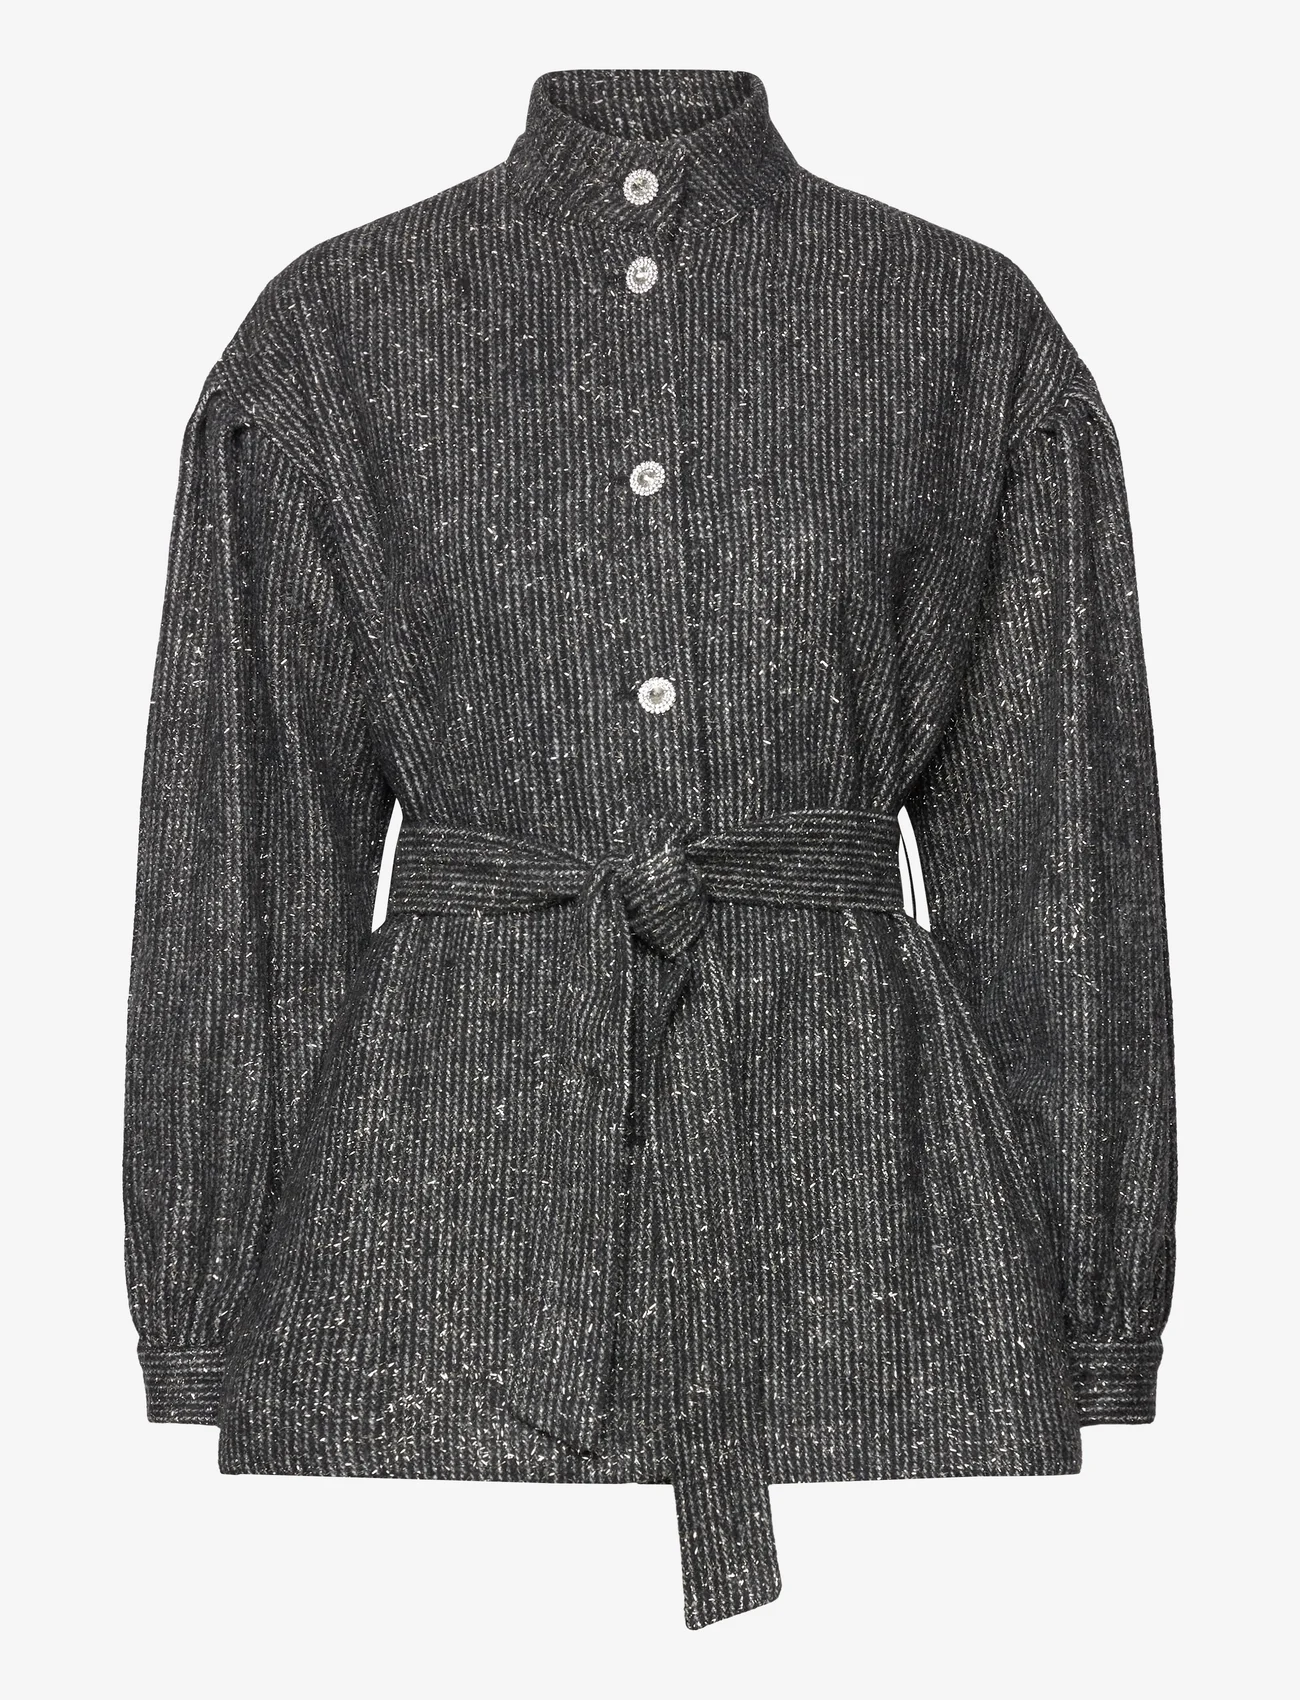 Bruuns Bazaar - BergeniaBBMaddi jacket - winter jackets - black - 0